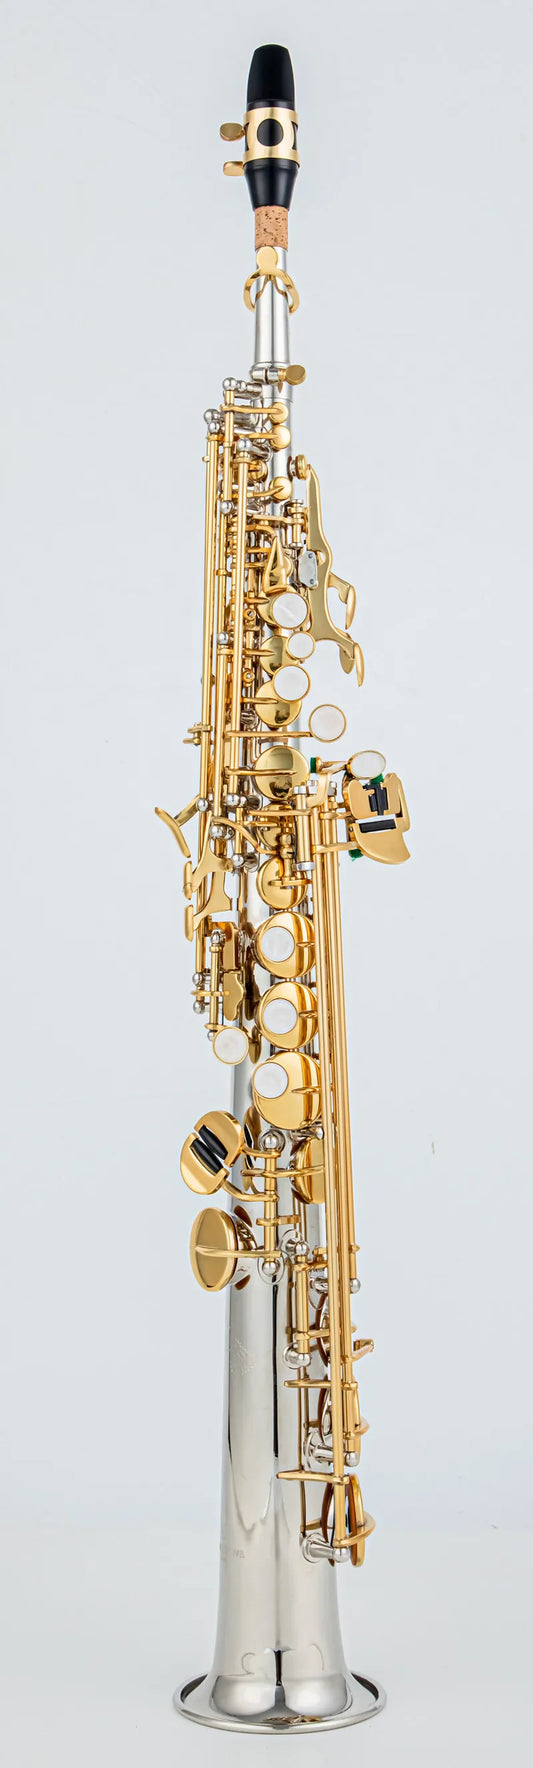 Soprano Saxophone WO37 Silvering Gold Key With Case Sax Soprano Mouthpiece Ligature Reeds Neck